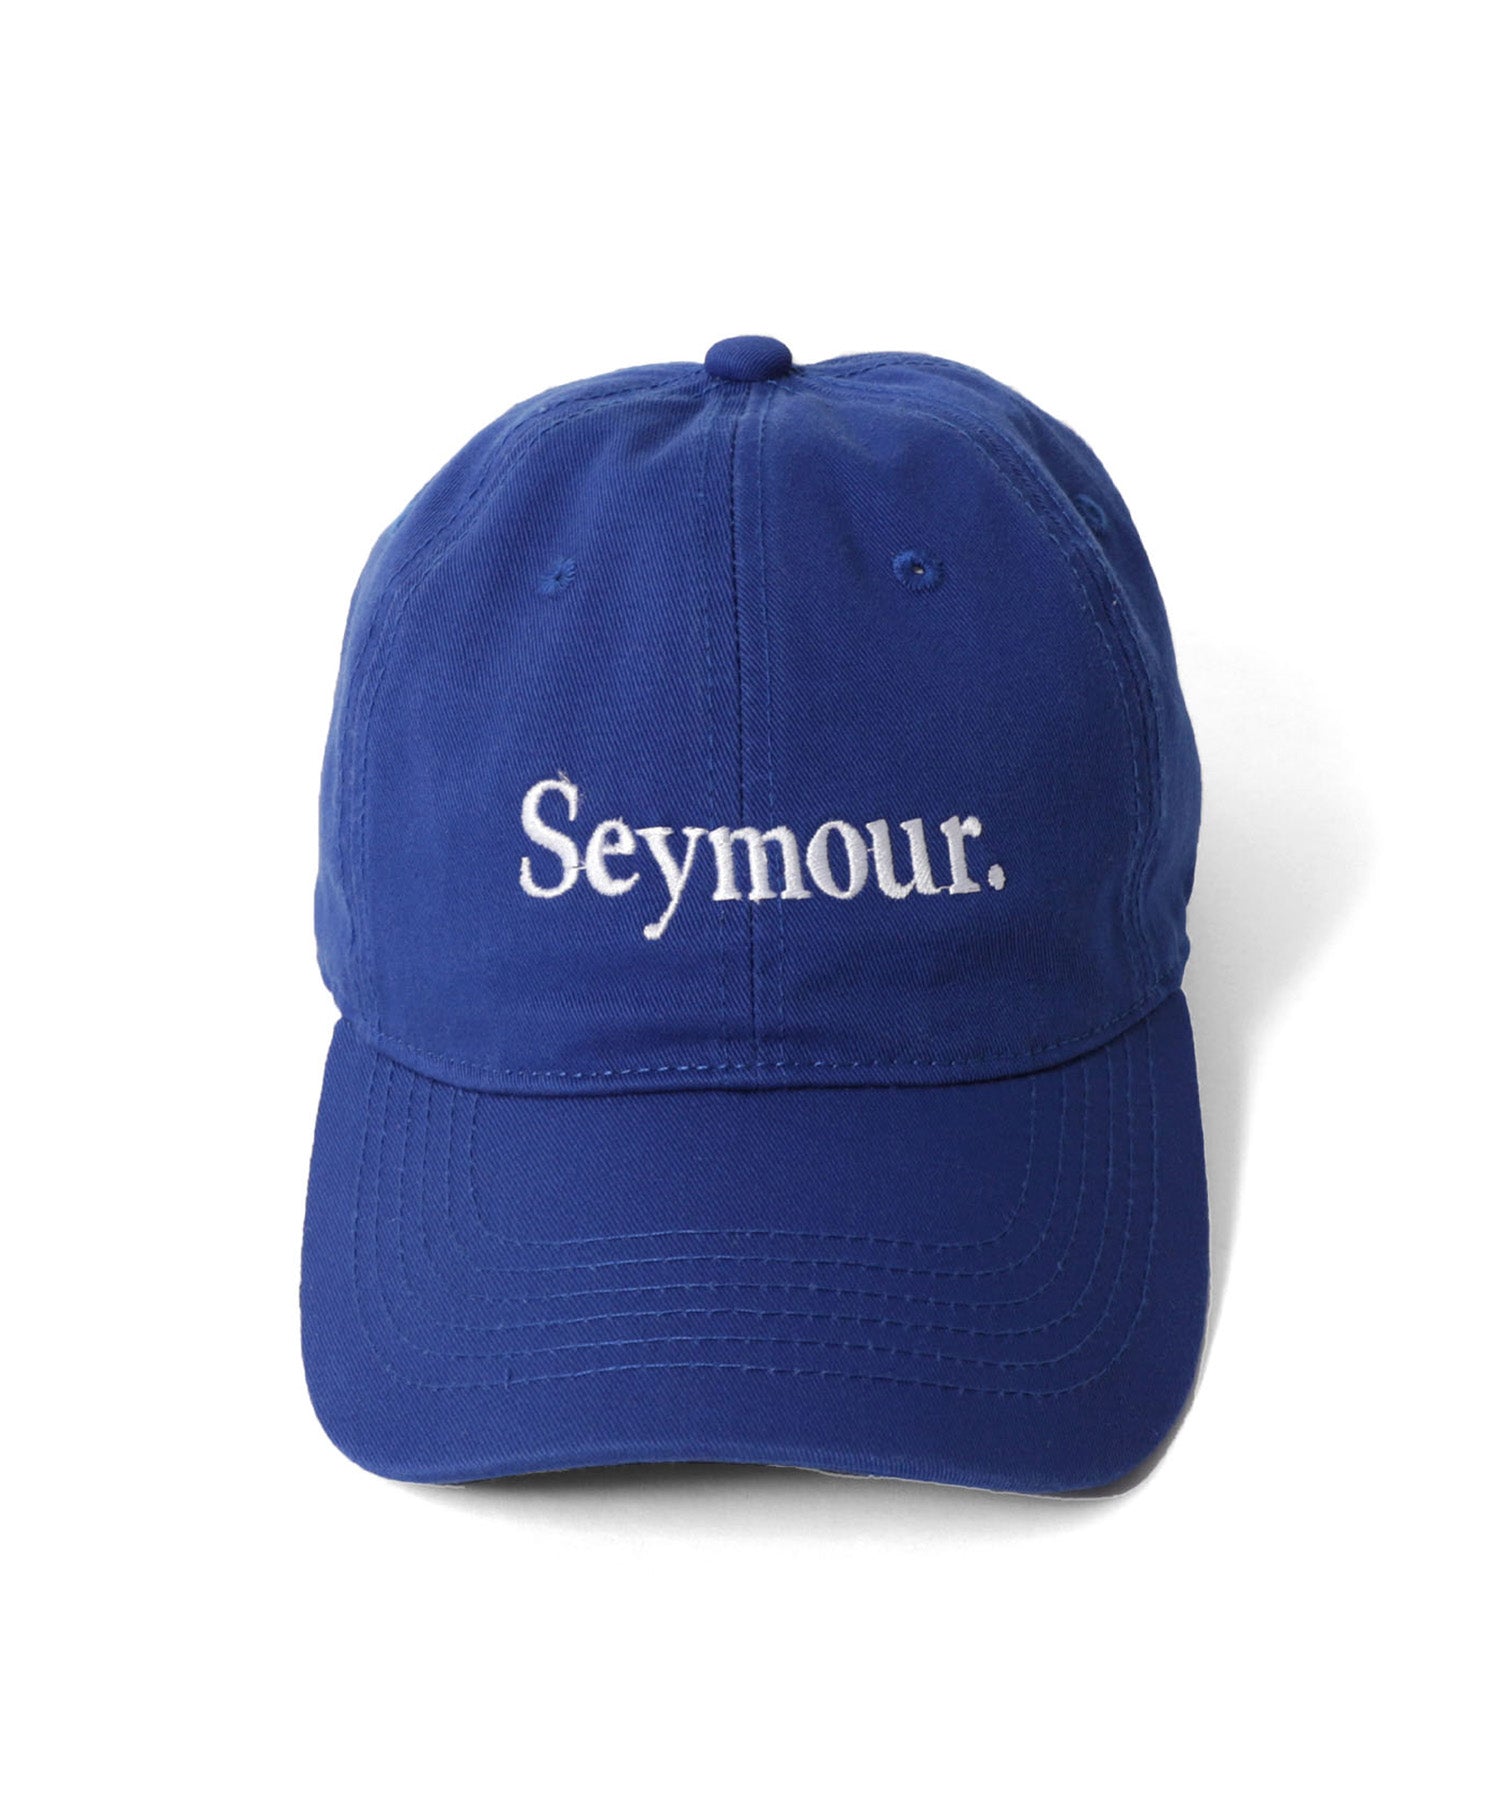 Seymour. "LOGO" EMBROIDERY CAP